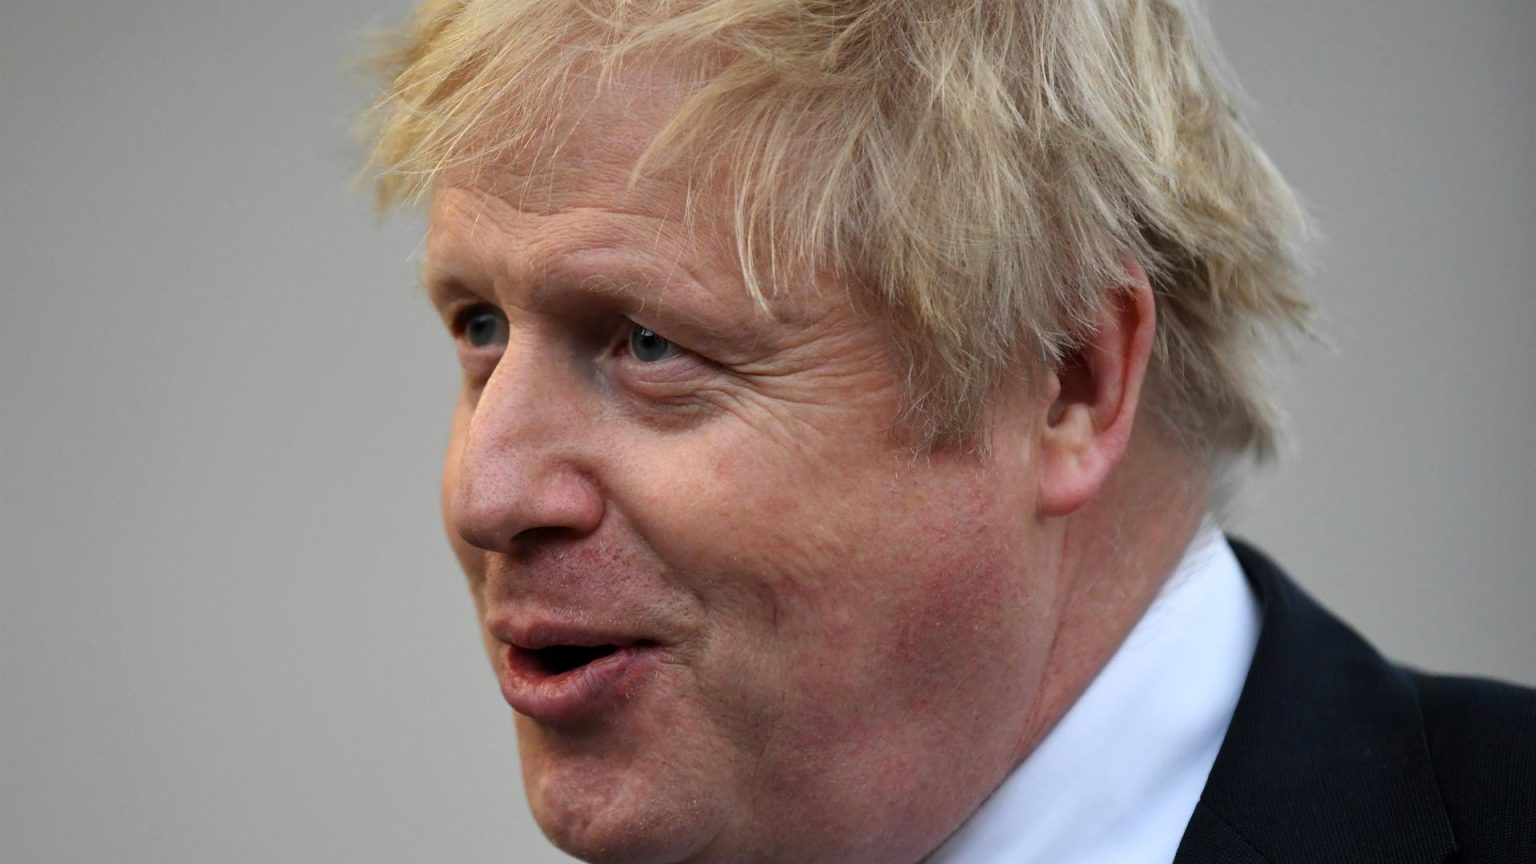 Boris Johnson visitará varios países europeos para abordar la crisis de Ucrania